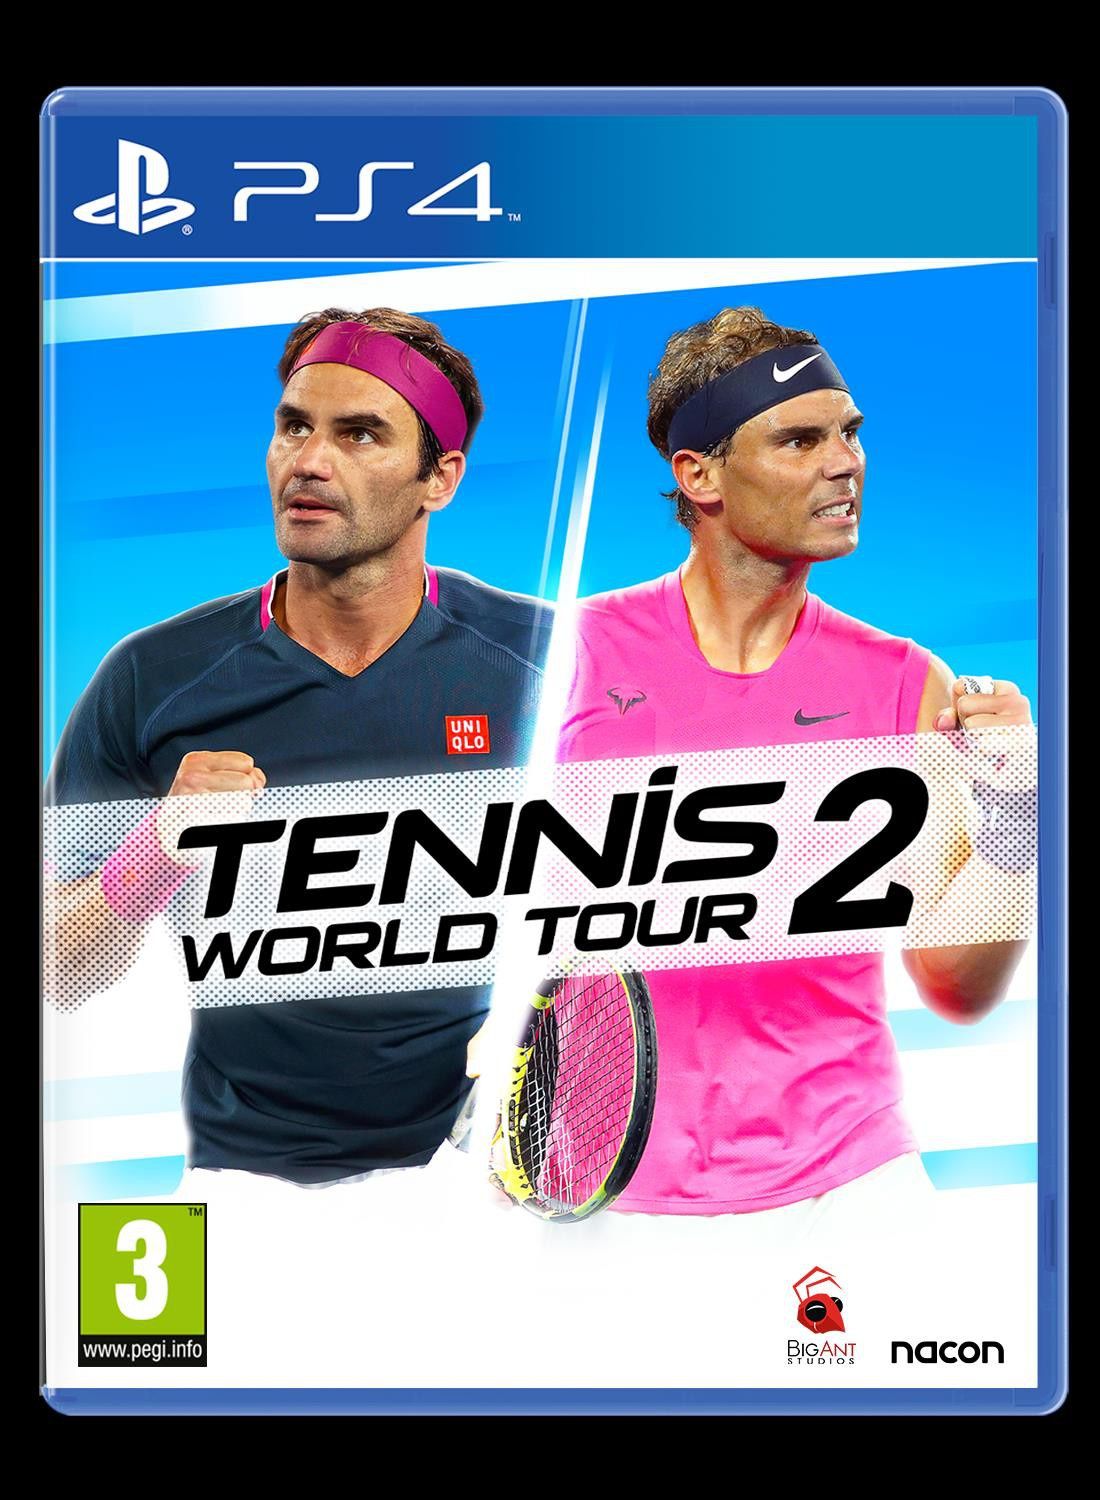 ps4 tennis world tour 2 review